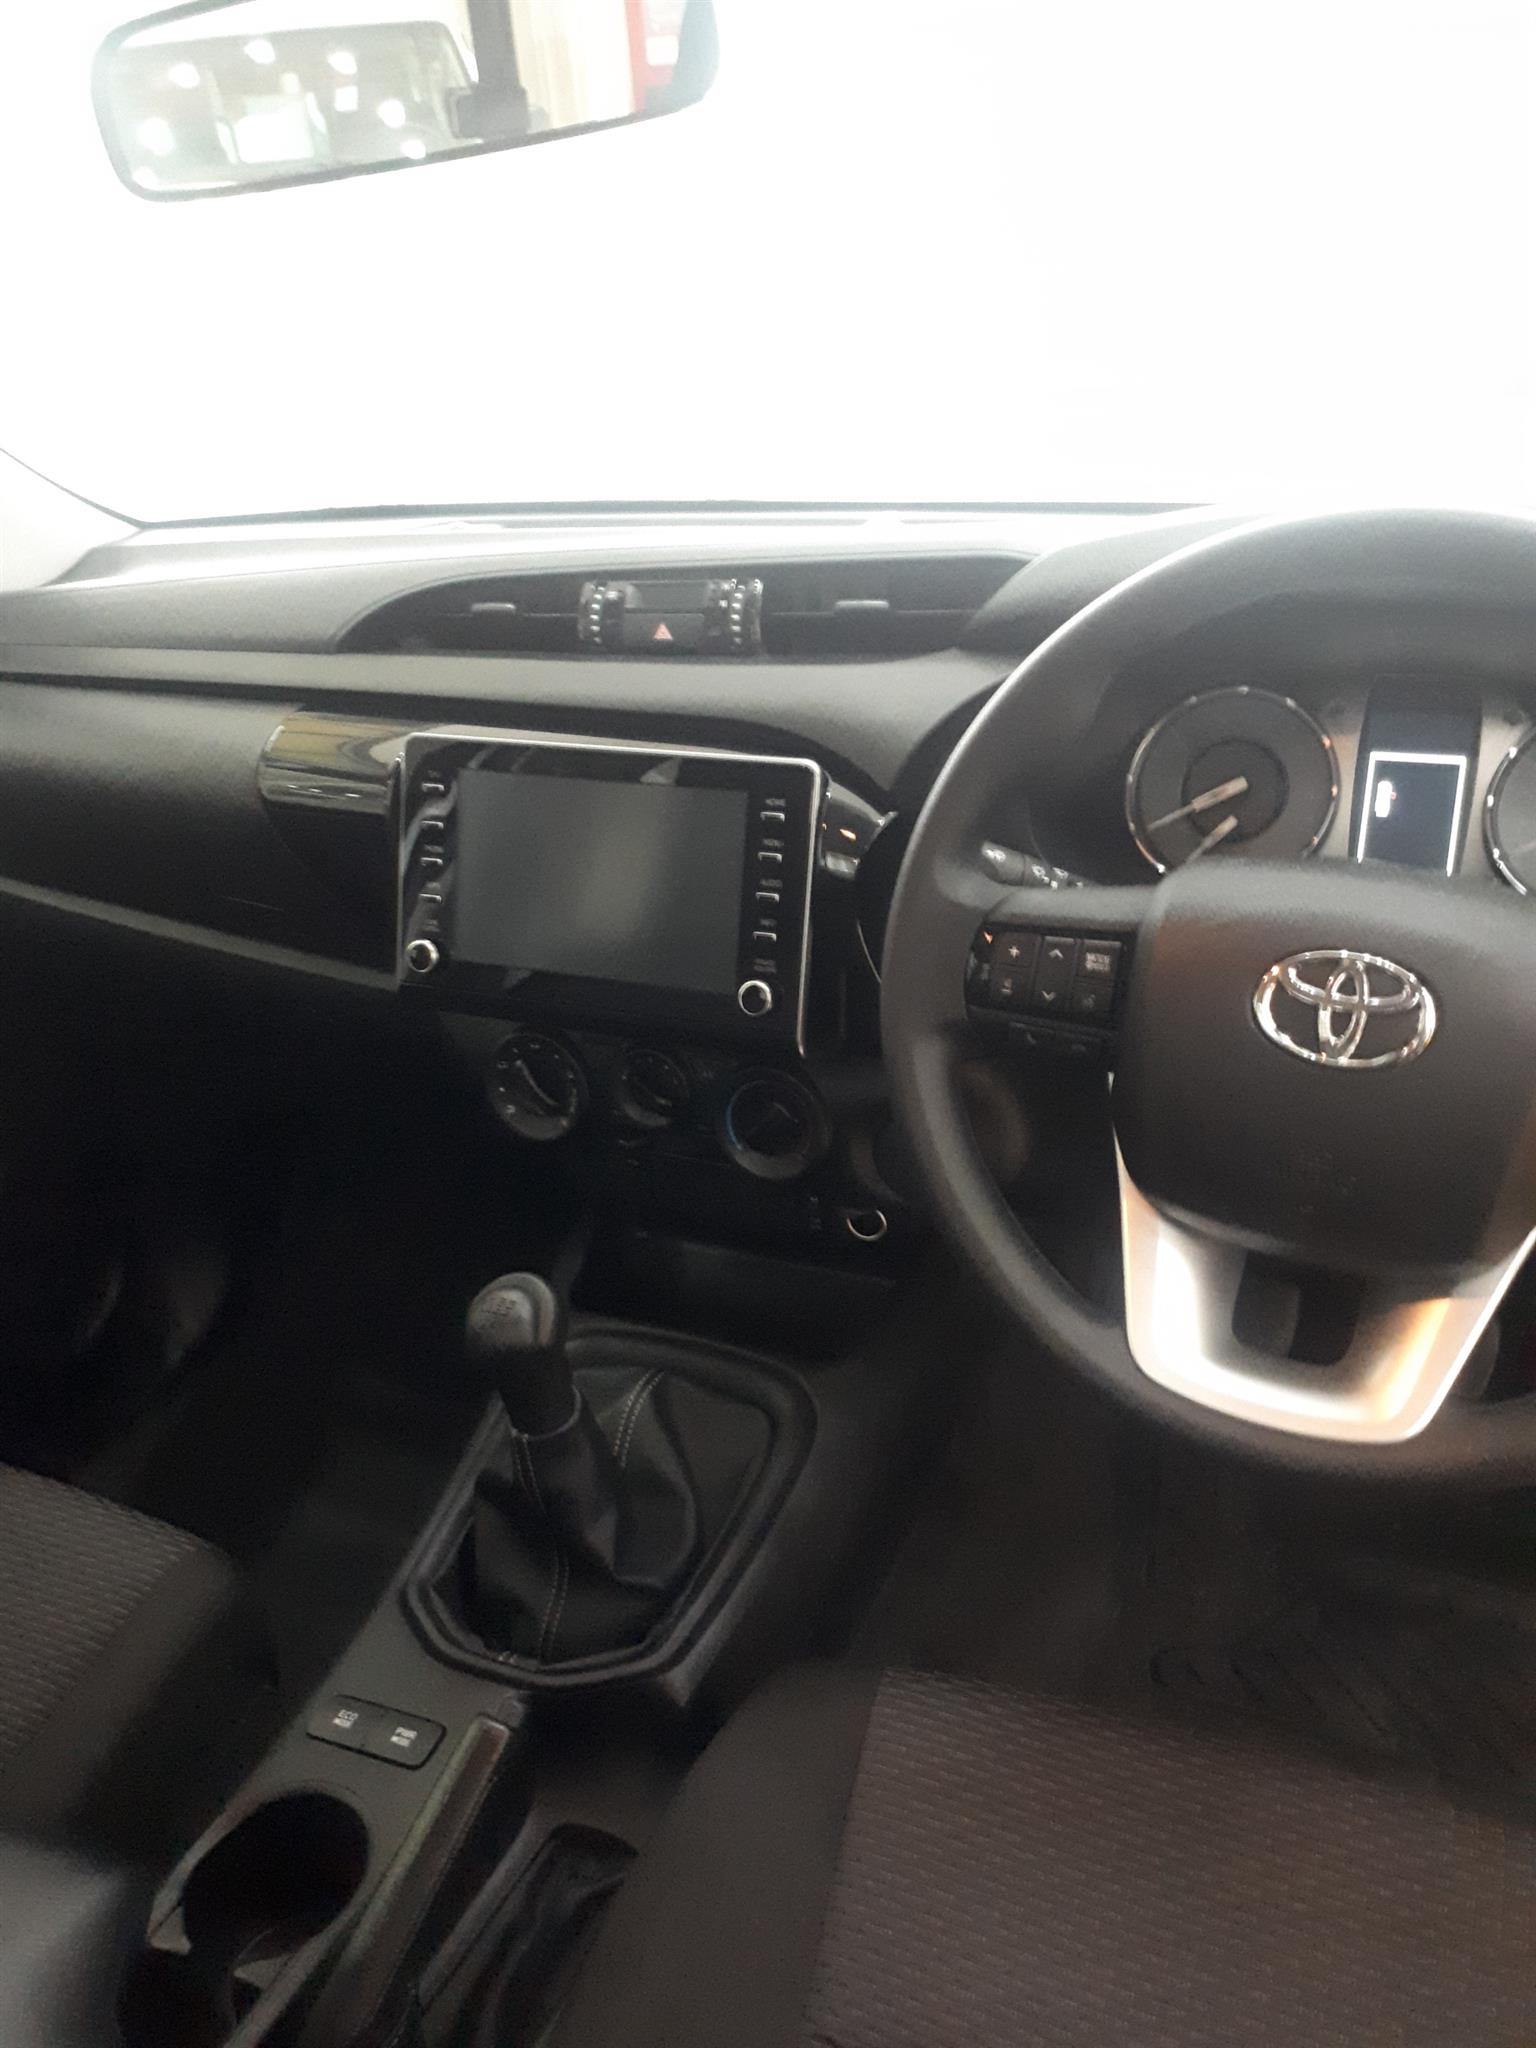 New Toyota Hilux 2.4GD6 4x2 Single cab